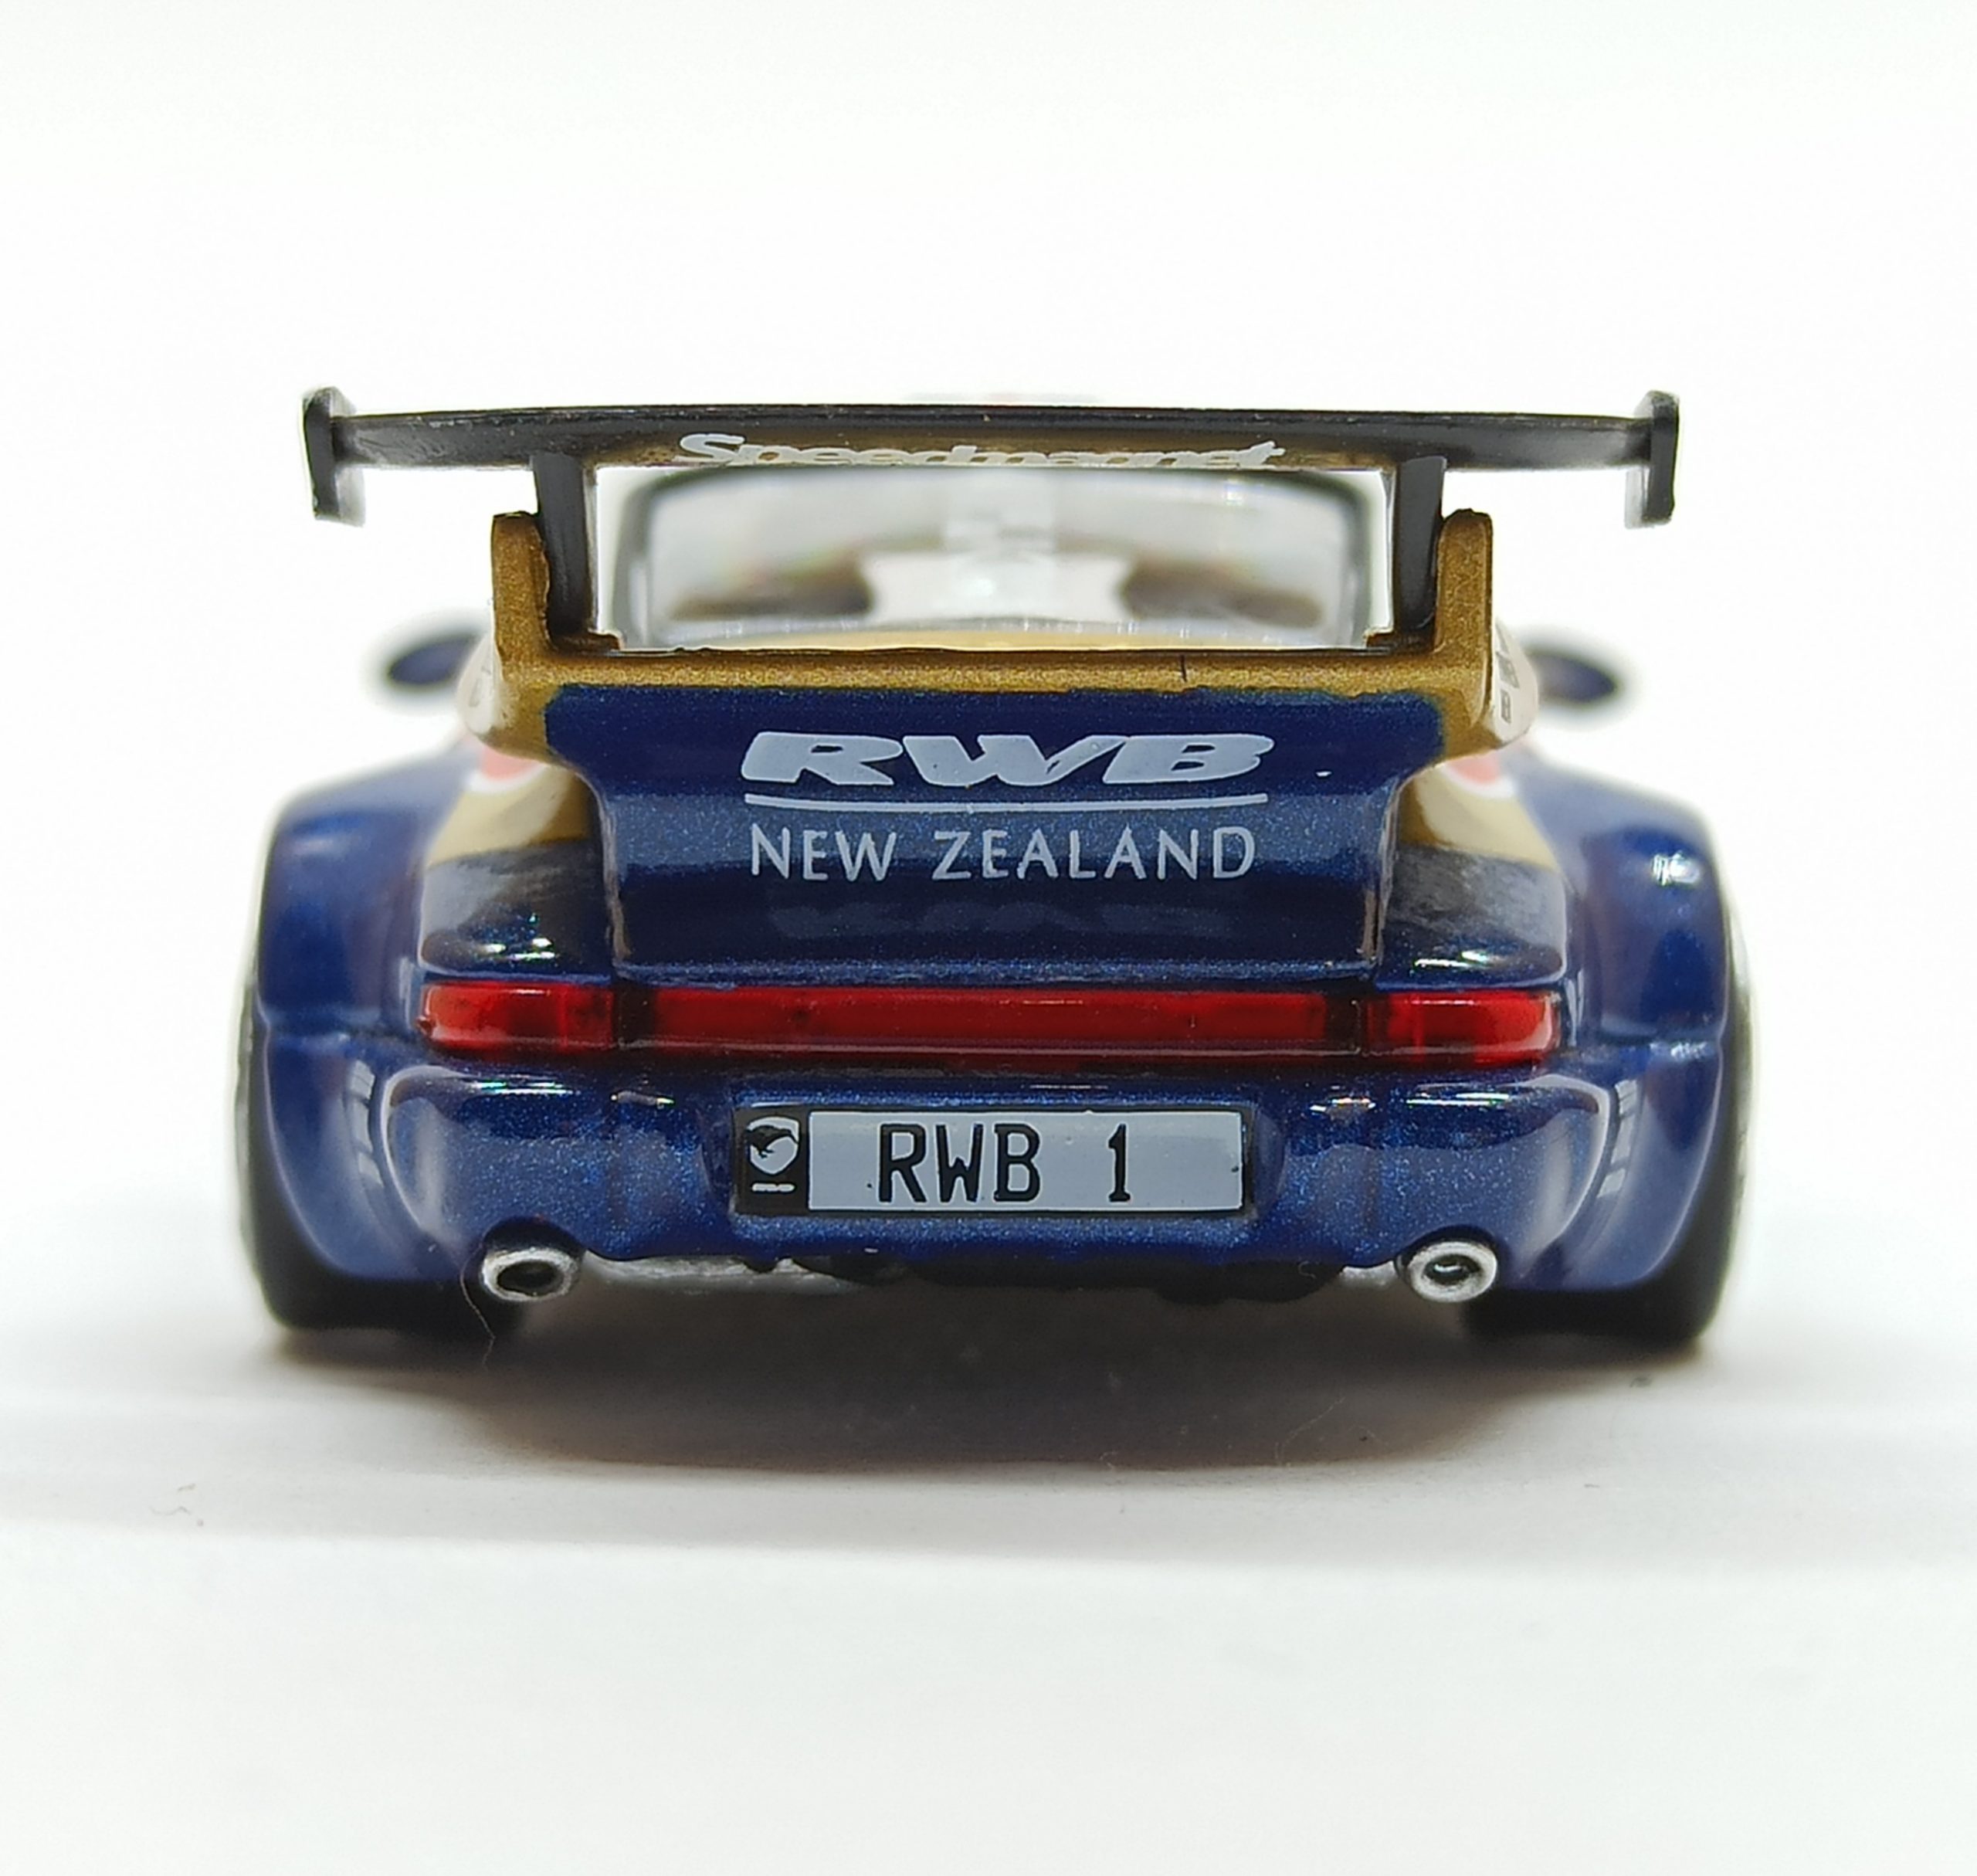 Tarmac Porsche RWB 964 (T64-037-WKT) 2021 Waicato RAUH-Welt HOBBY64 white, blue